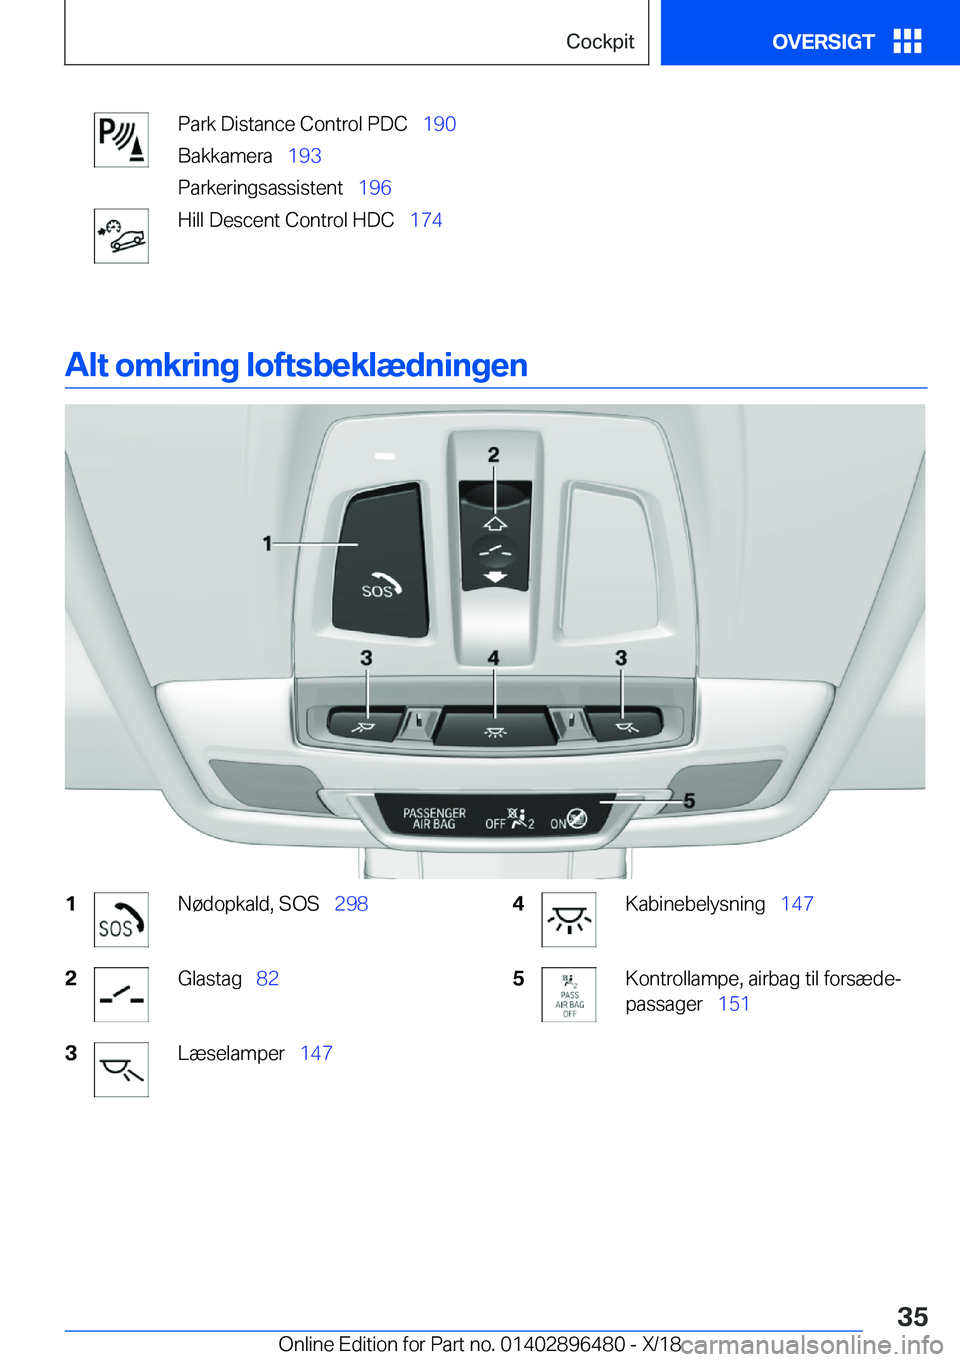 BMW X1 2019  InstruktionsbØger (in Danish) �P�a�r�k��D�i�s�t�a�n�c�e��C�o�n�t�r�o�l��P�D�C\_�1�9�0
�B�a�k�k�a�m�e�r�a\_ �1�9�3
�P�a�r�k�e�r�i�n�g�s�a�s�s�i�s�t�e�n�t\_ �1�9�6�H�i�l�l��D�e�s�c�e�n�t��C�o�n�t�r�o�l��H�D�C\_ �1�7�4
